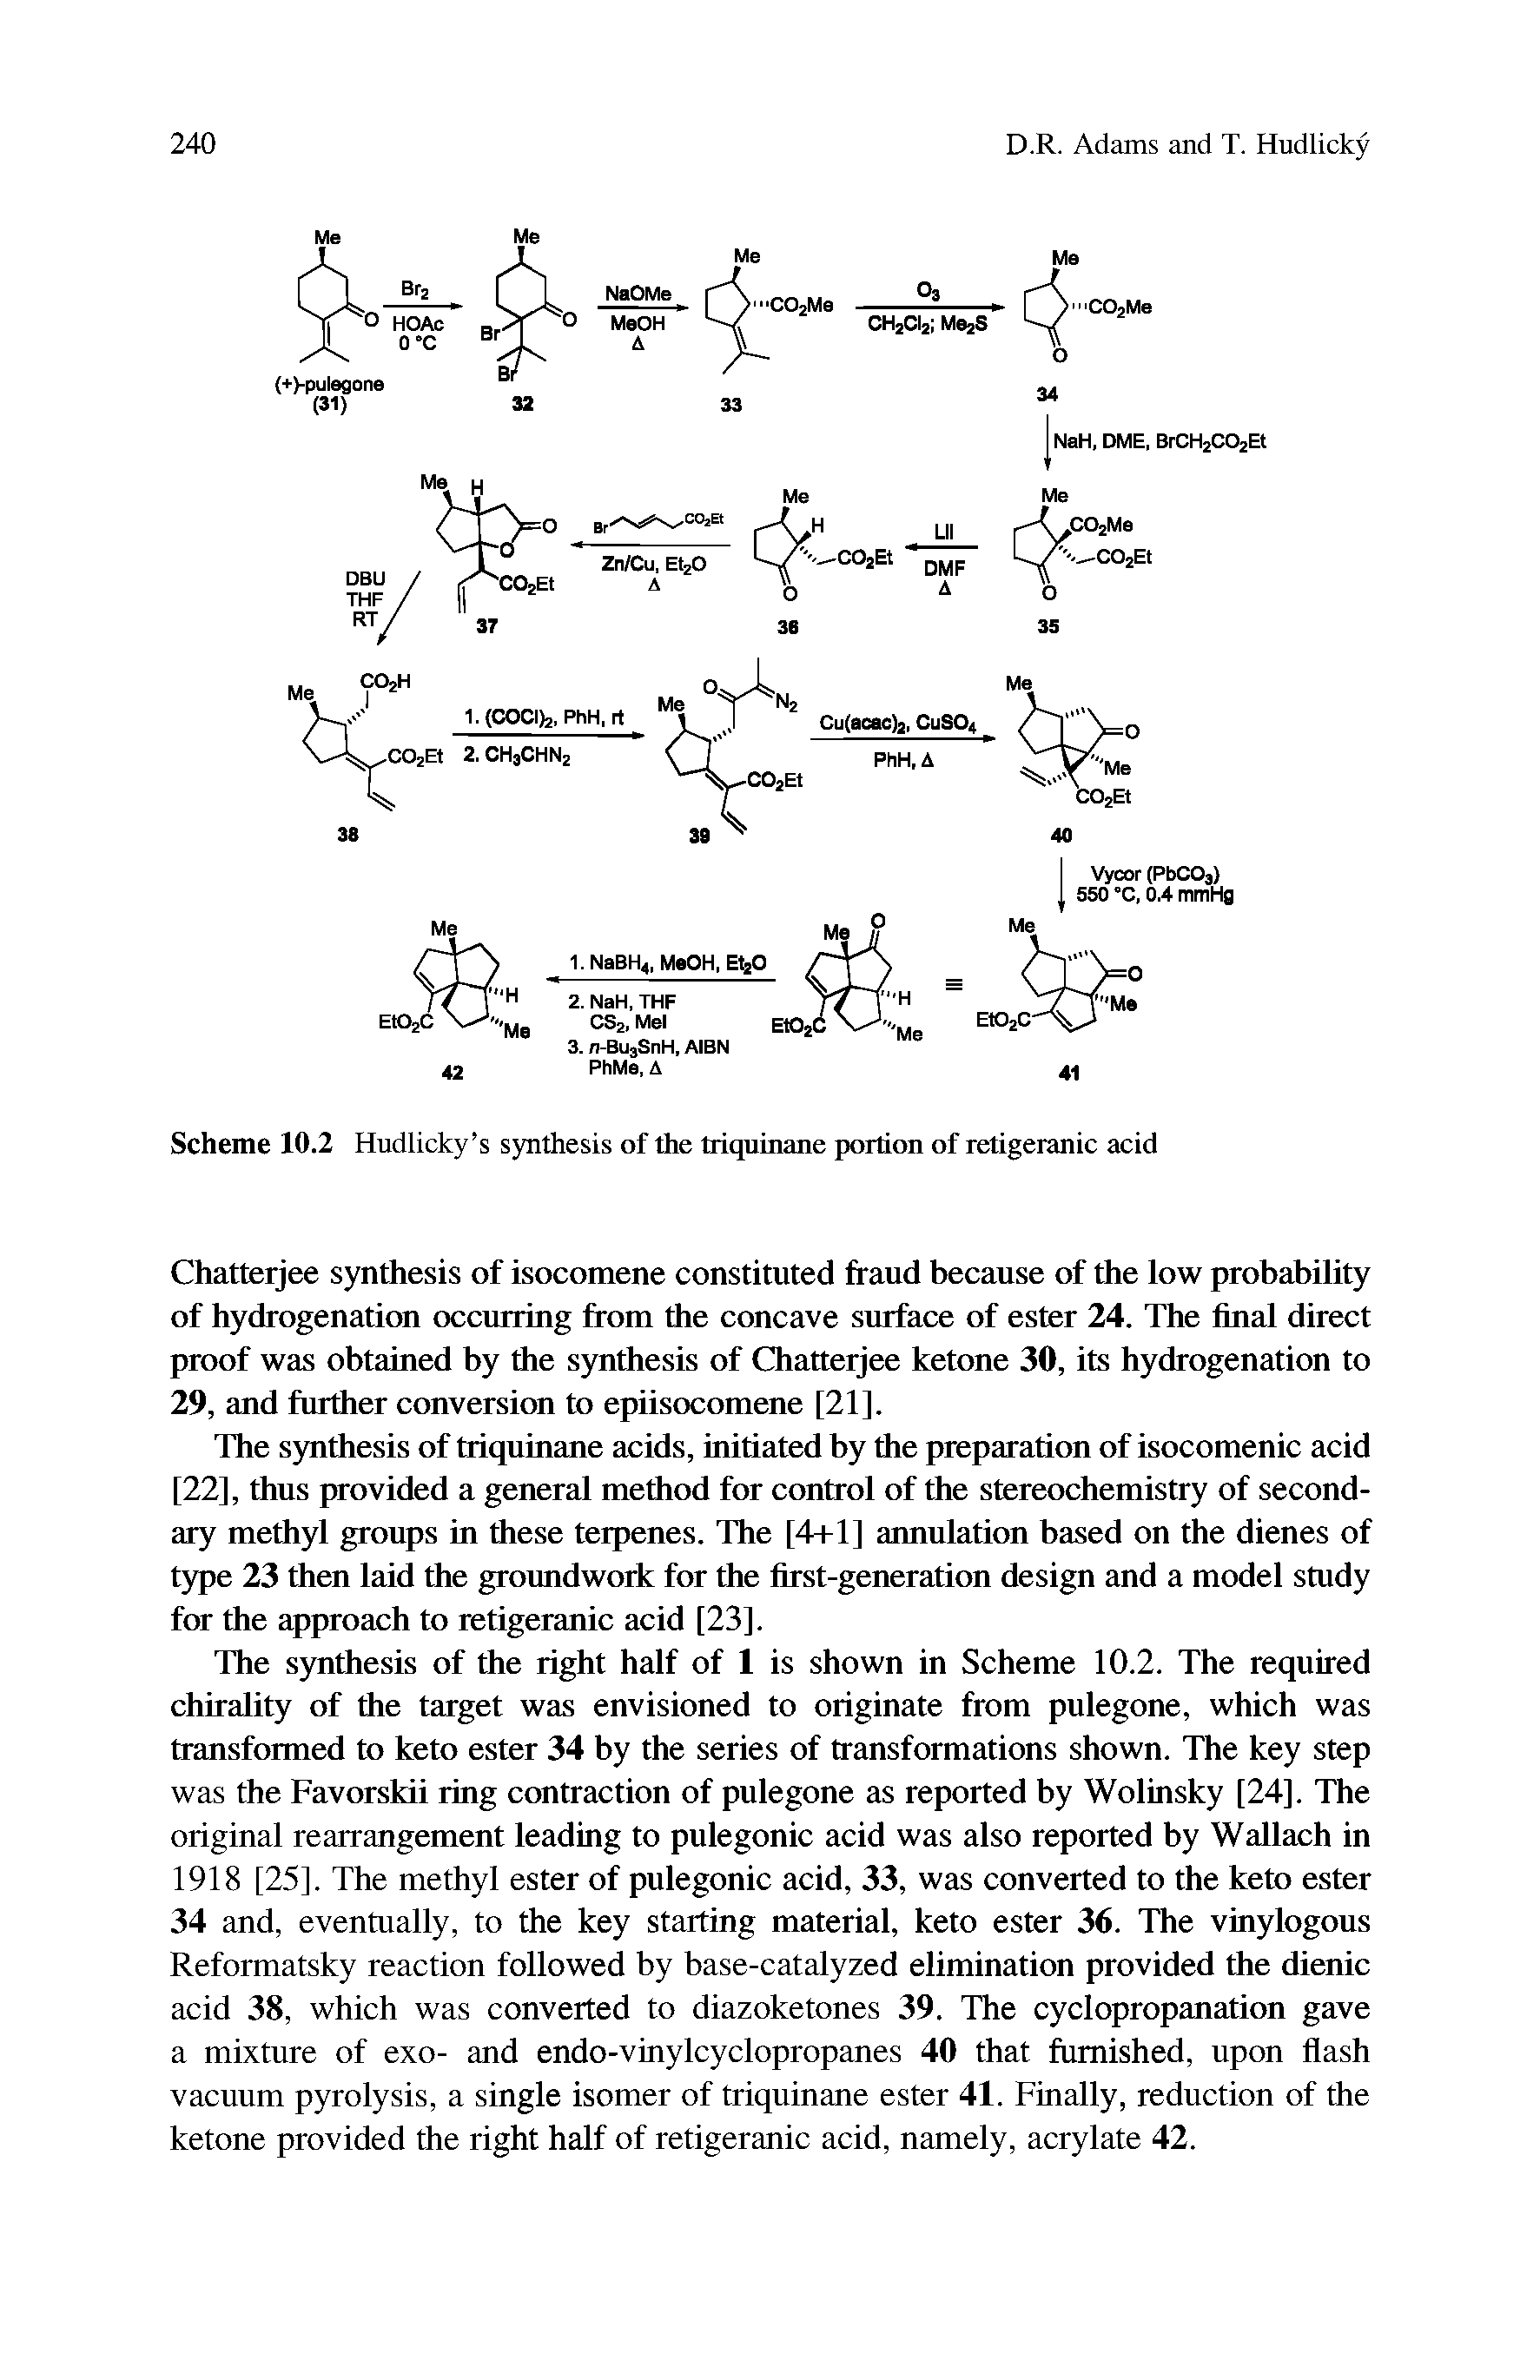 Scheme 10.2 Hudlicky s synthesis of the triquinane portion of retigeranic acid...